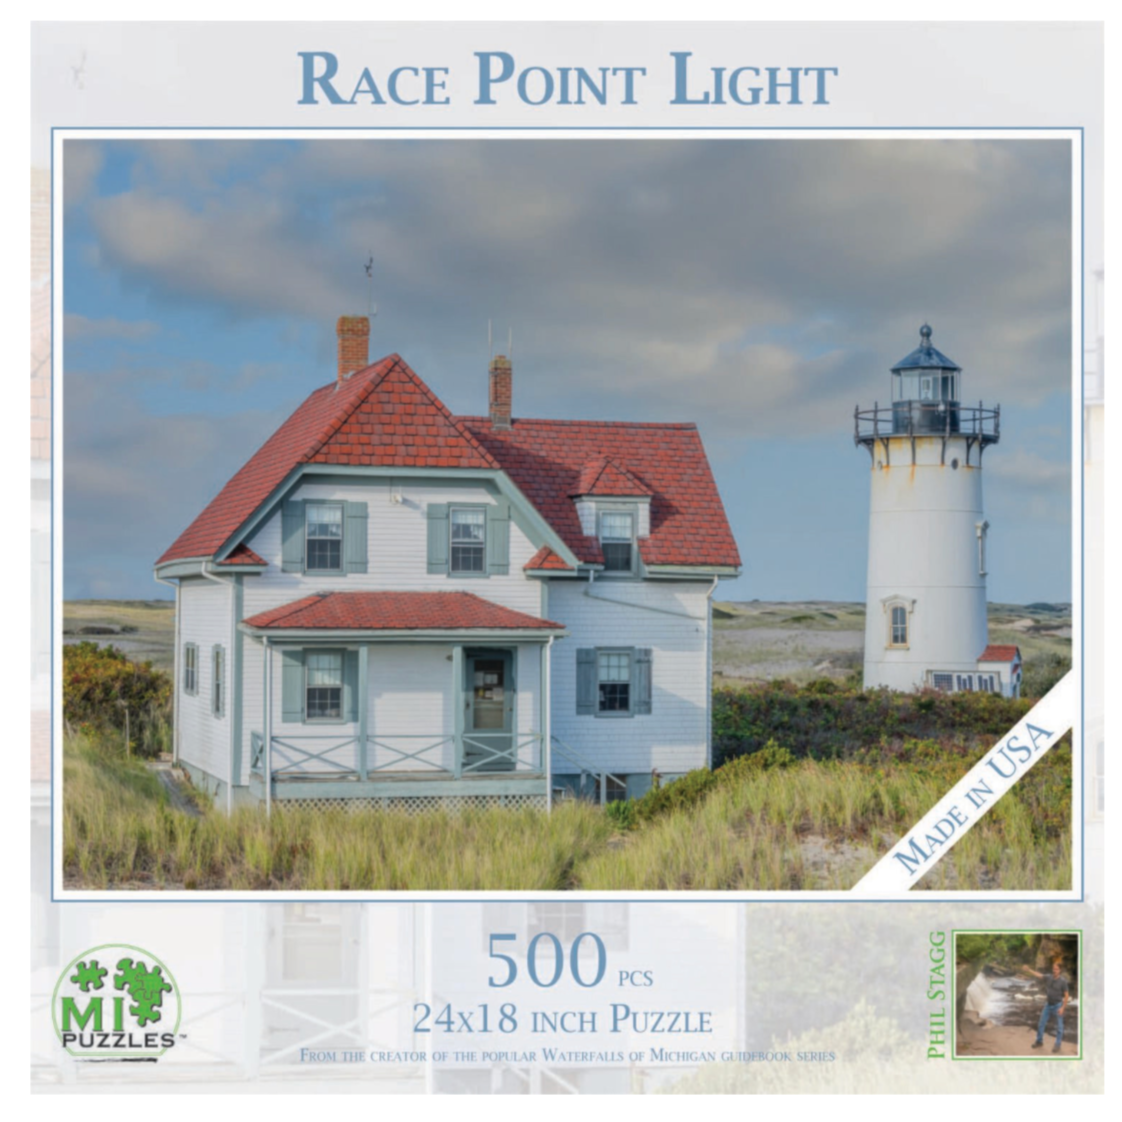 Race Point Light 500 pc Jigsaw Puzzle